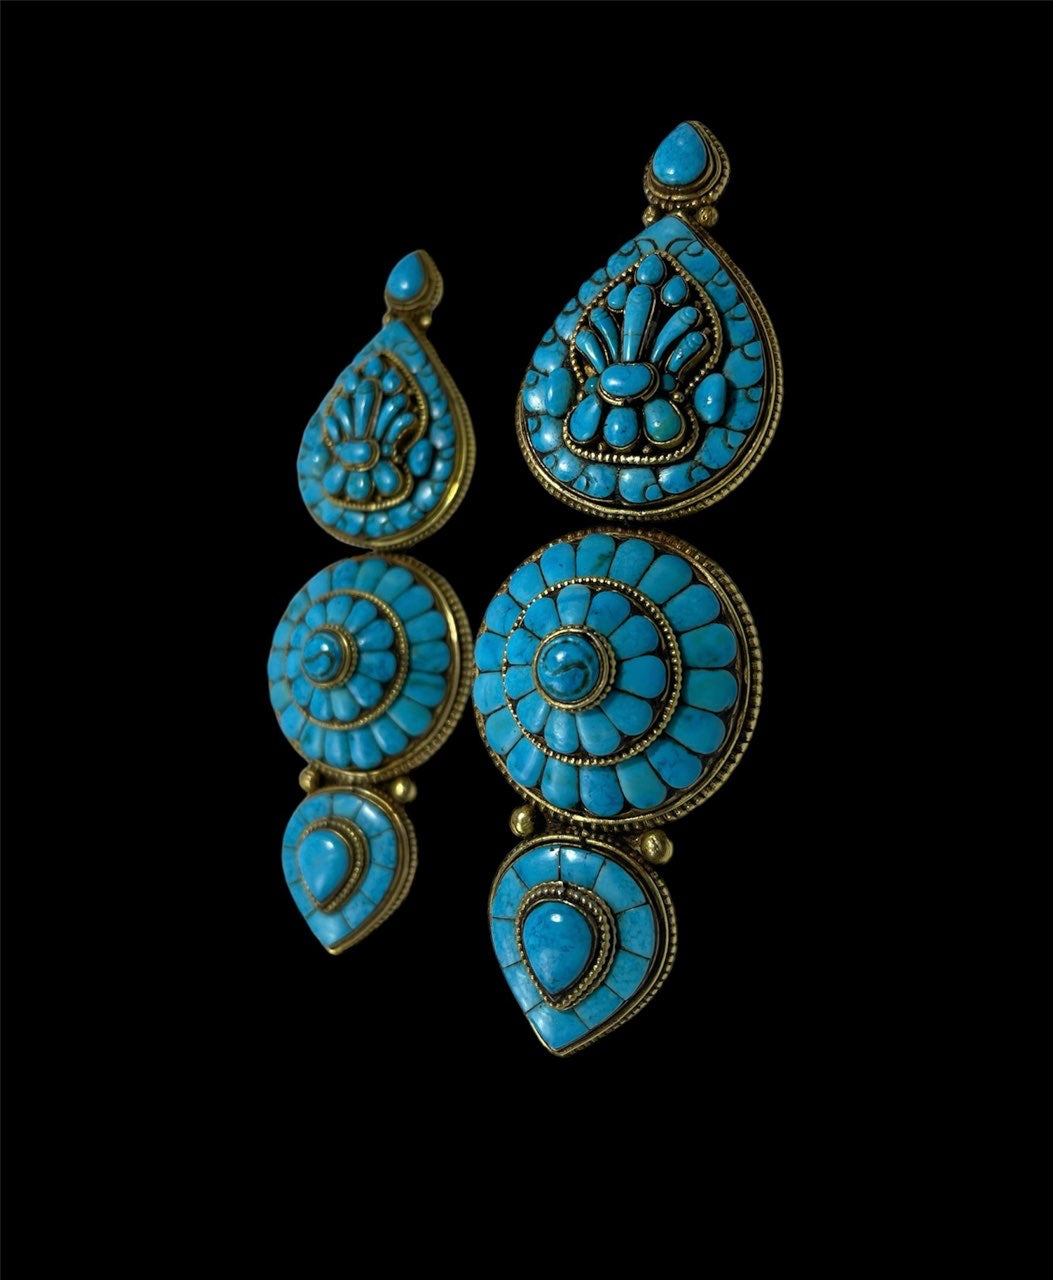 A pair of Tibetan traditional turquoise ear pendants - Ay-khor